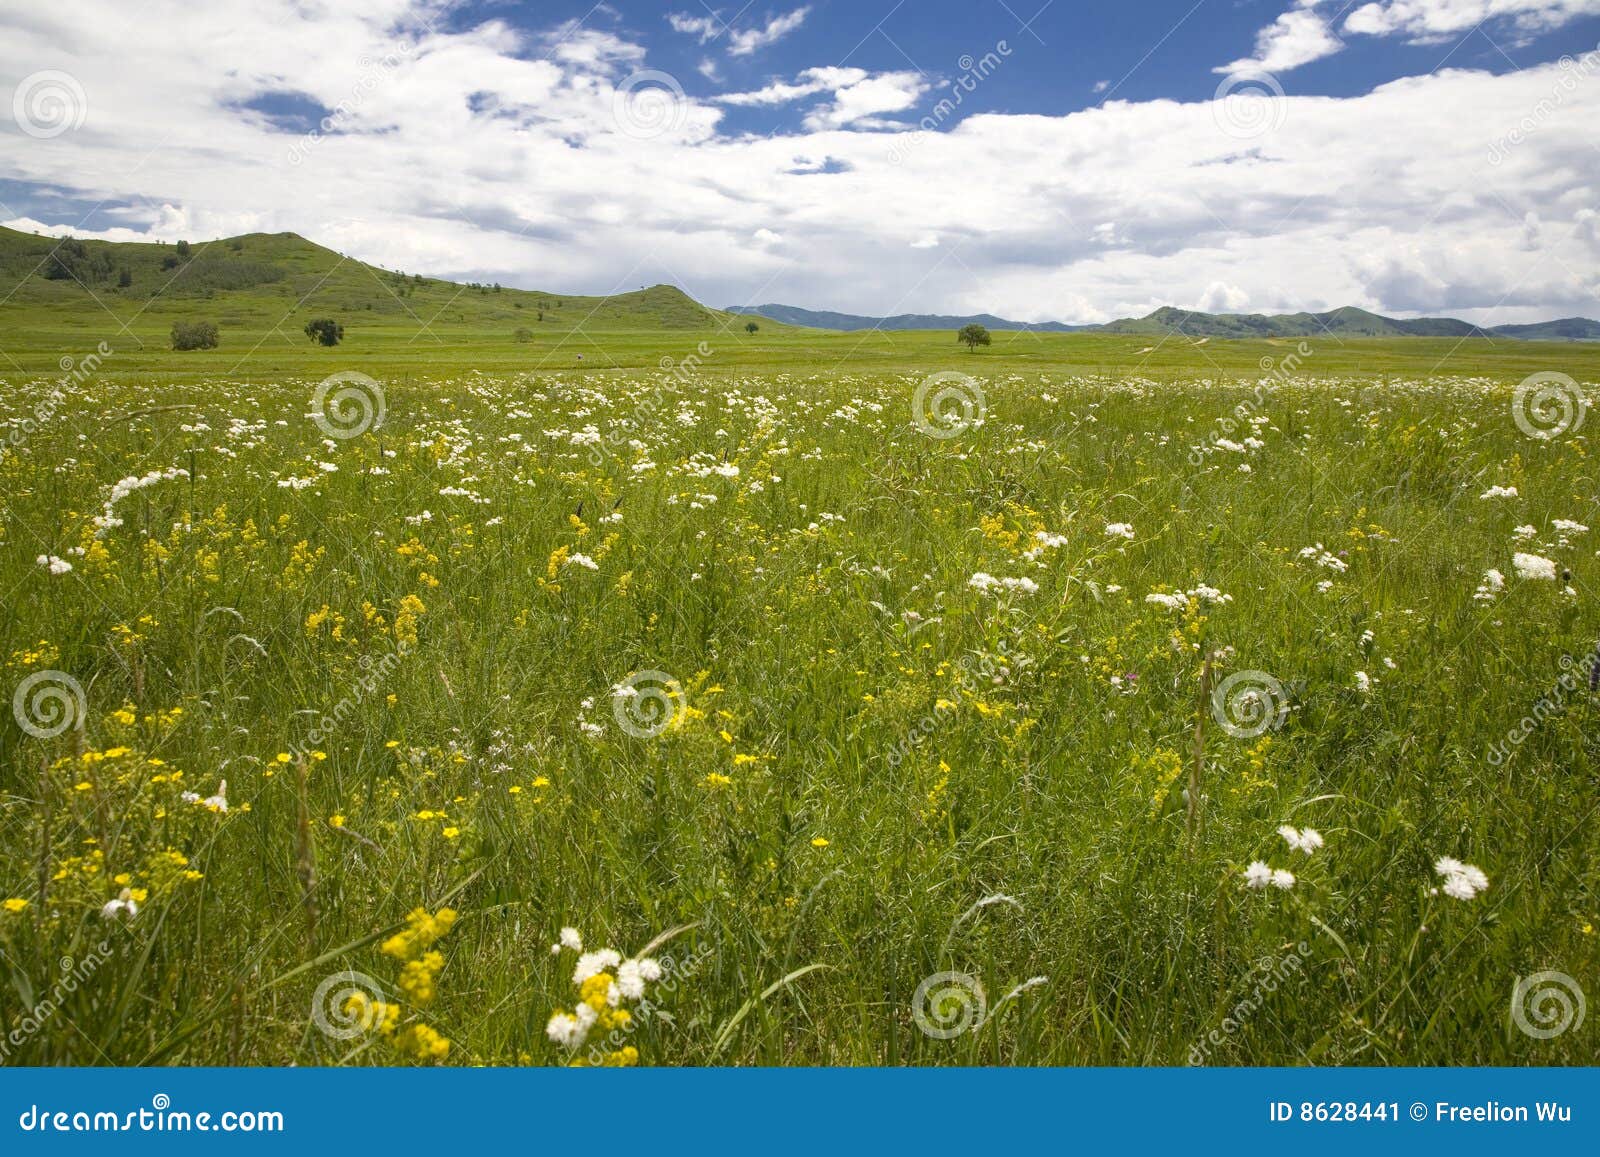 grassland and sky